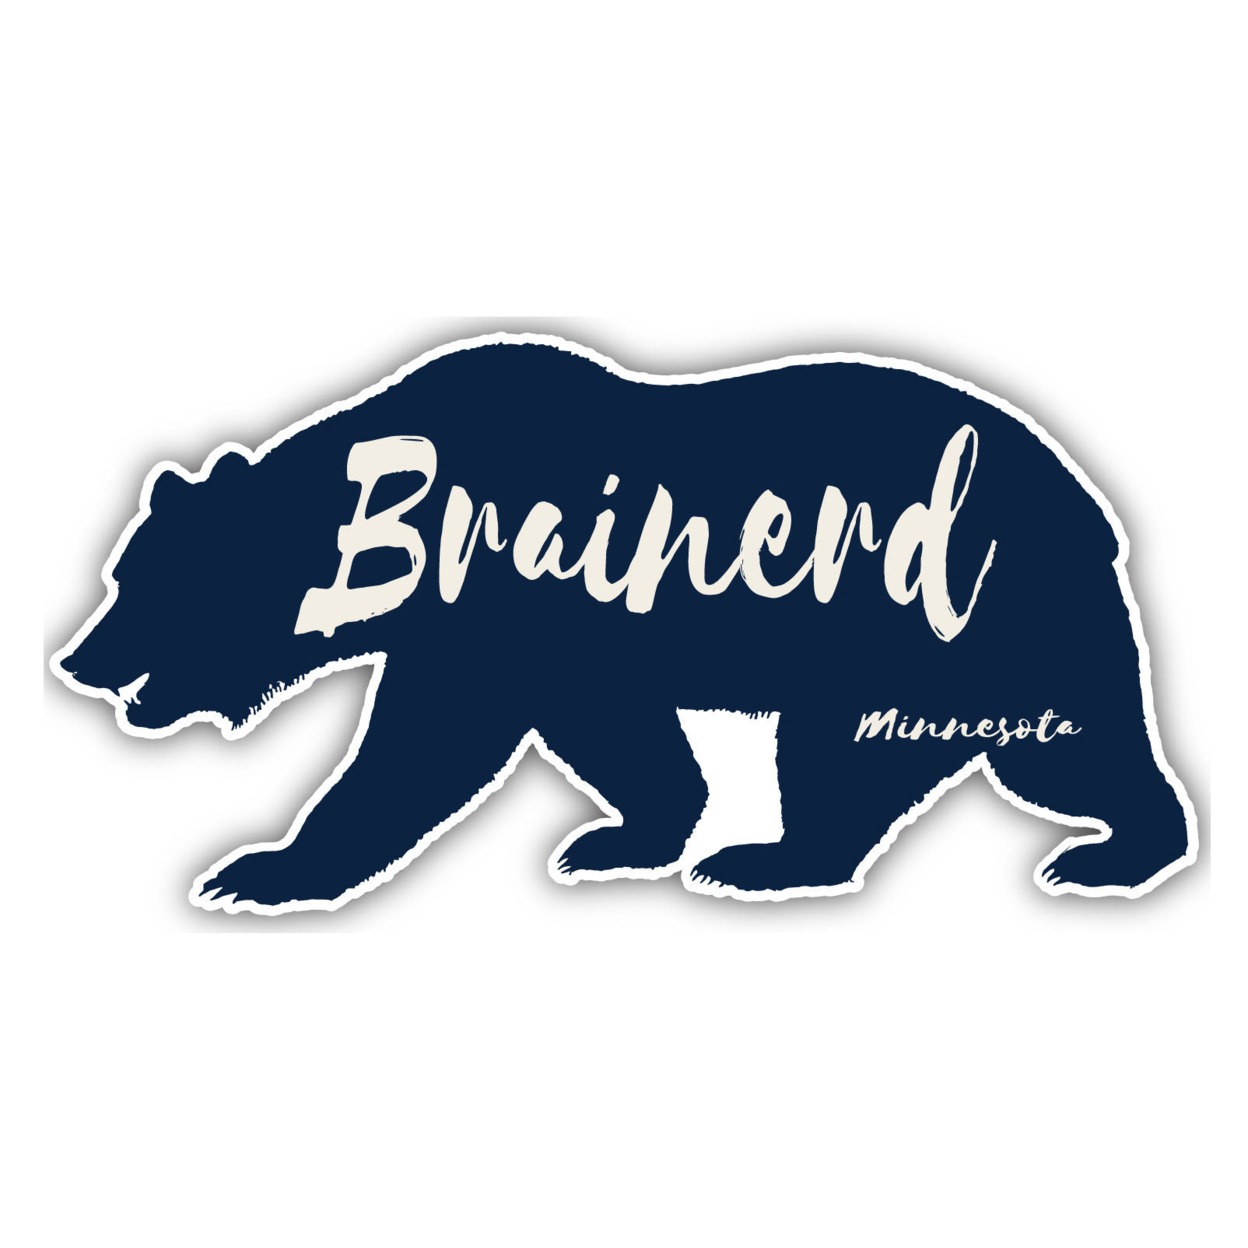 Brainerd Minnesota Souvenir Decorative Stickers (Choose Theme And Size) - 4-Pack, 8-Inch, Tent